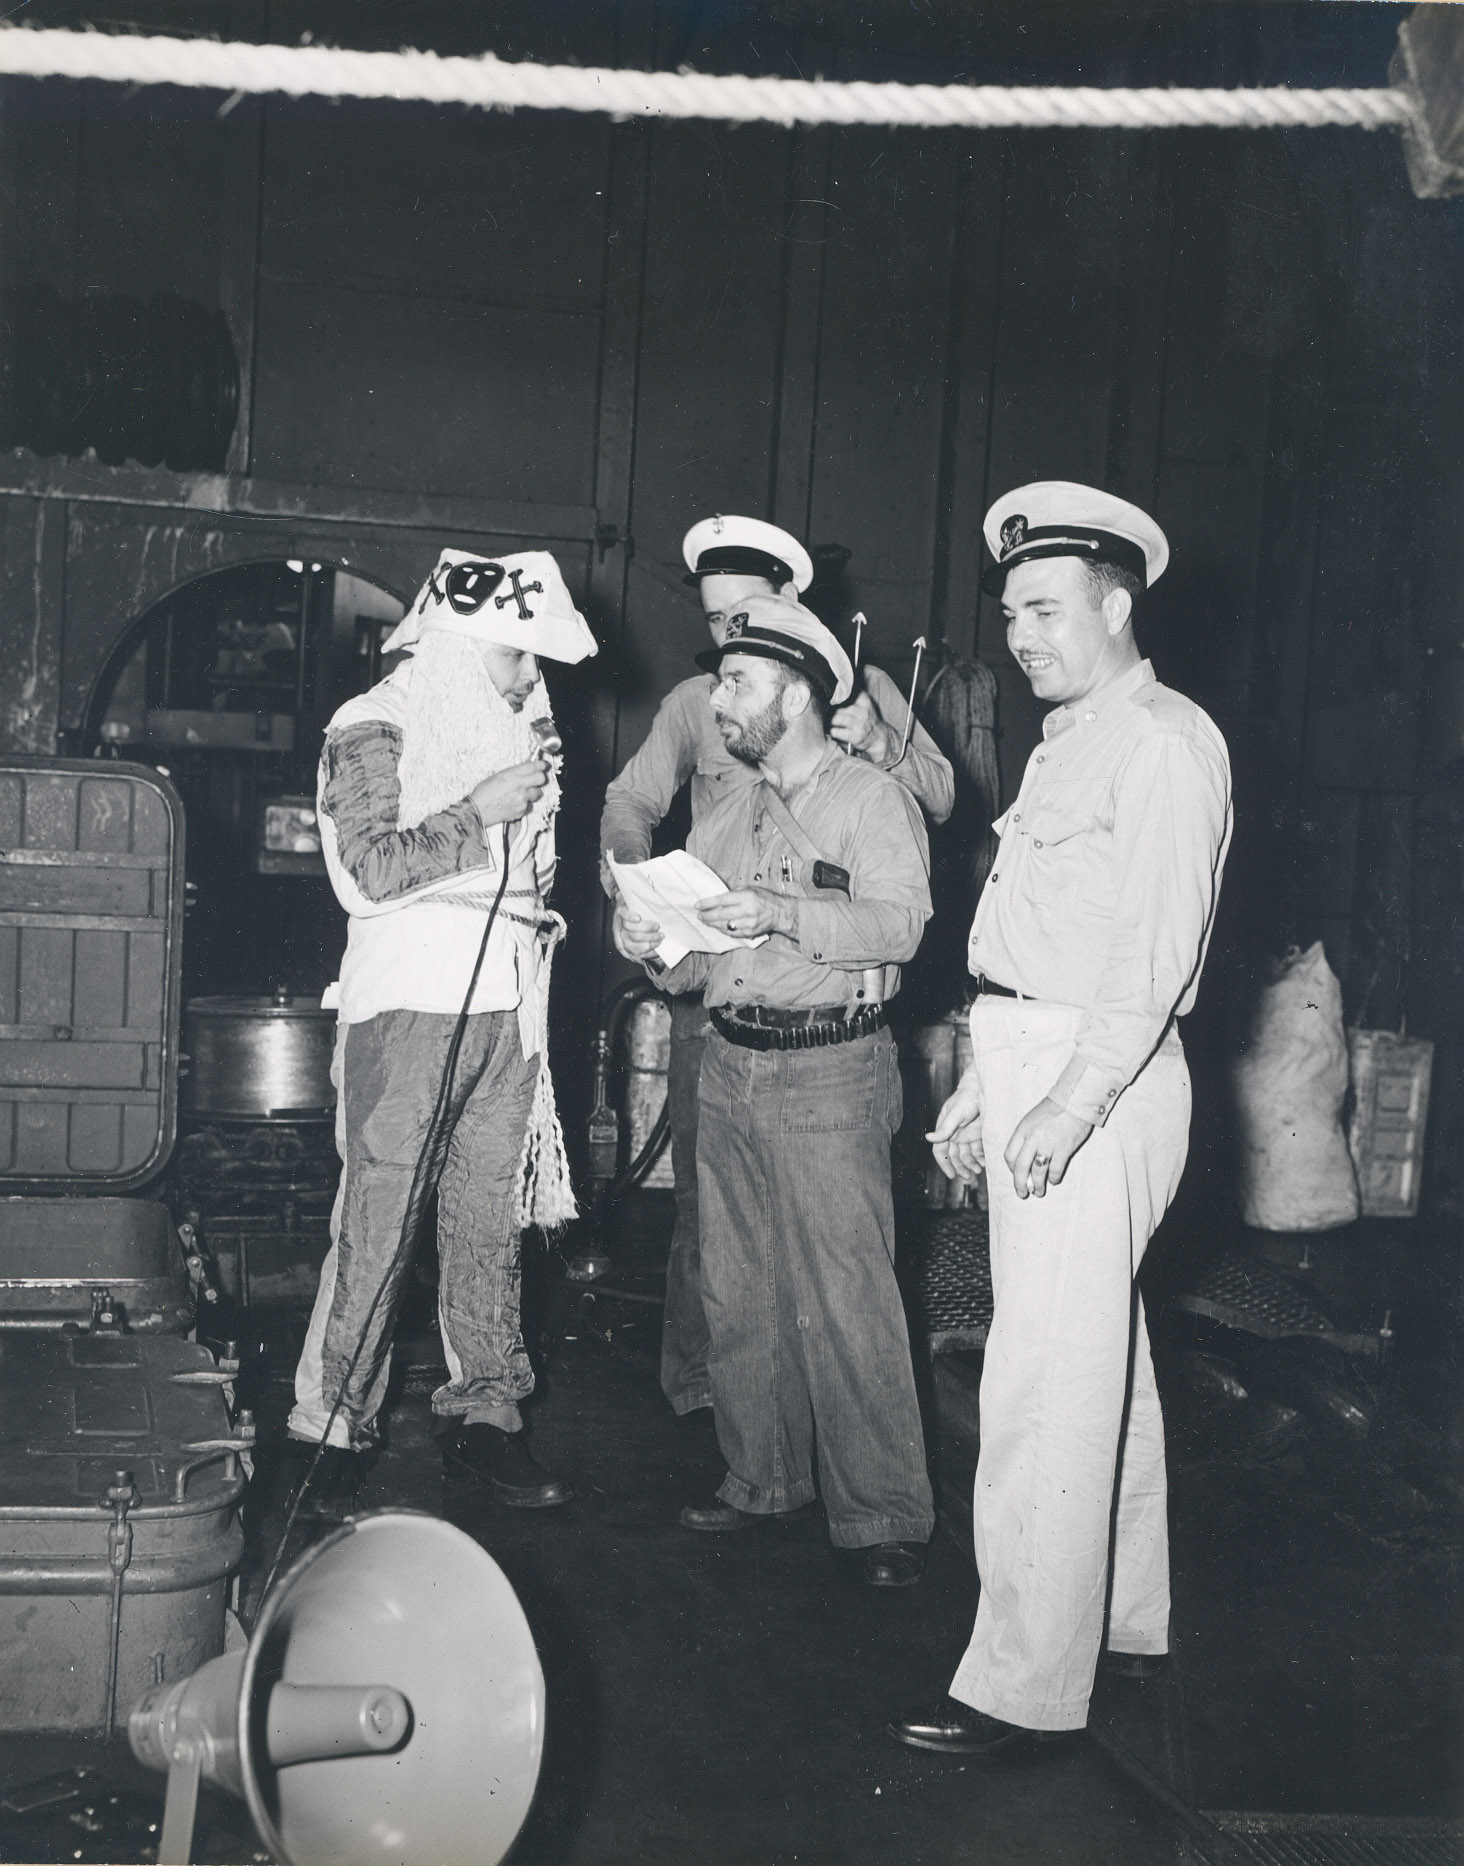 The Ruler of the Raging Main, Neptunus Rex, and his escort in the hangar deck of the USS Intrepid for the Line Crossing ceremonies, 22 Jan 1944.